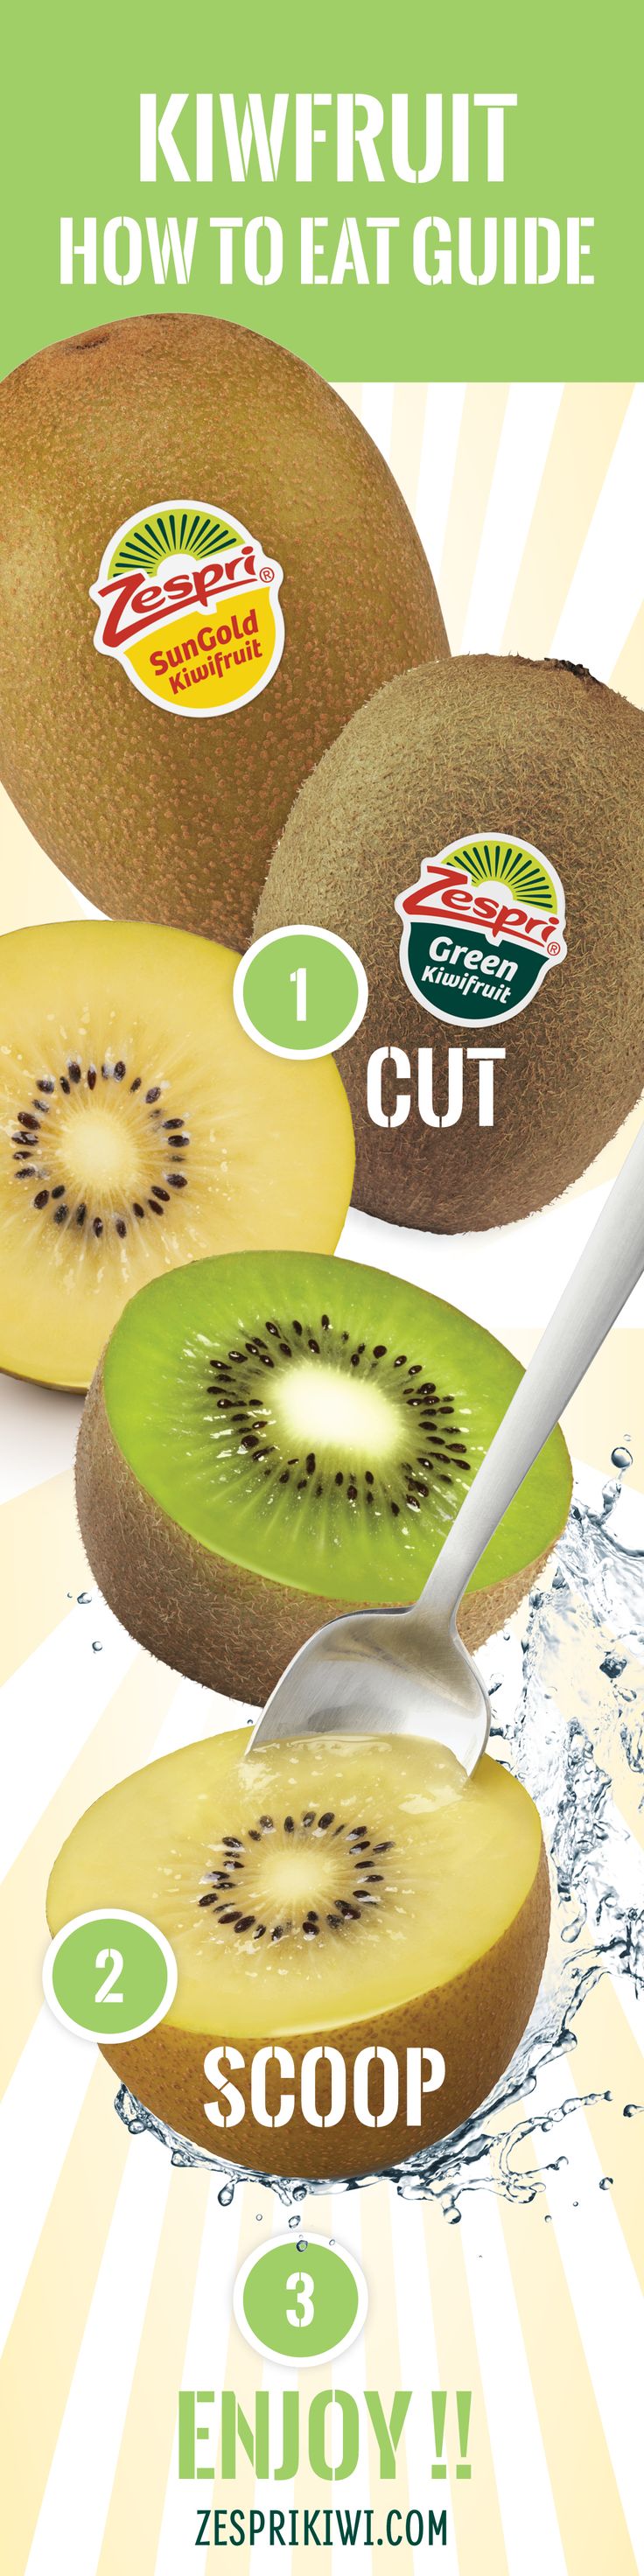 31 best How to Eat Kiwi images on Pinterest | Kiwi, Healthy ...